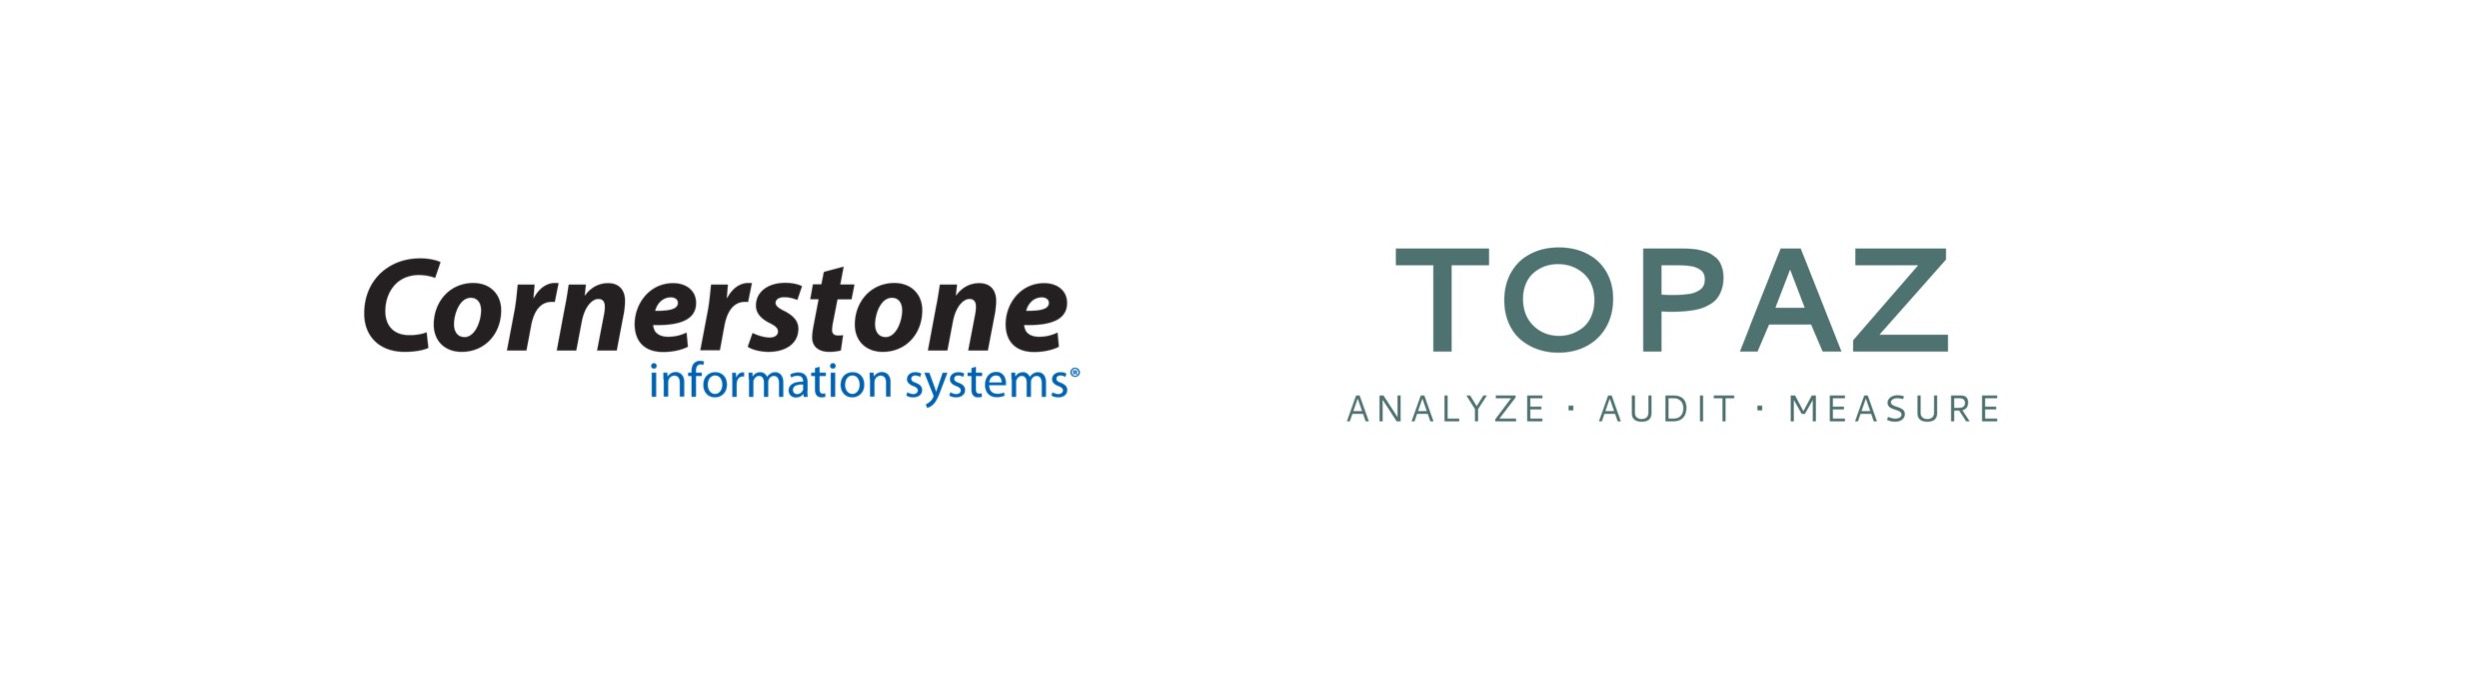 Cornerstone Acquires Topaz International